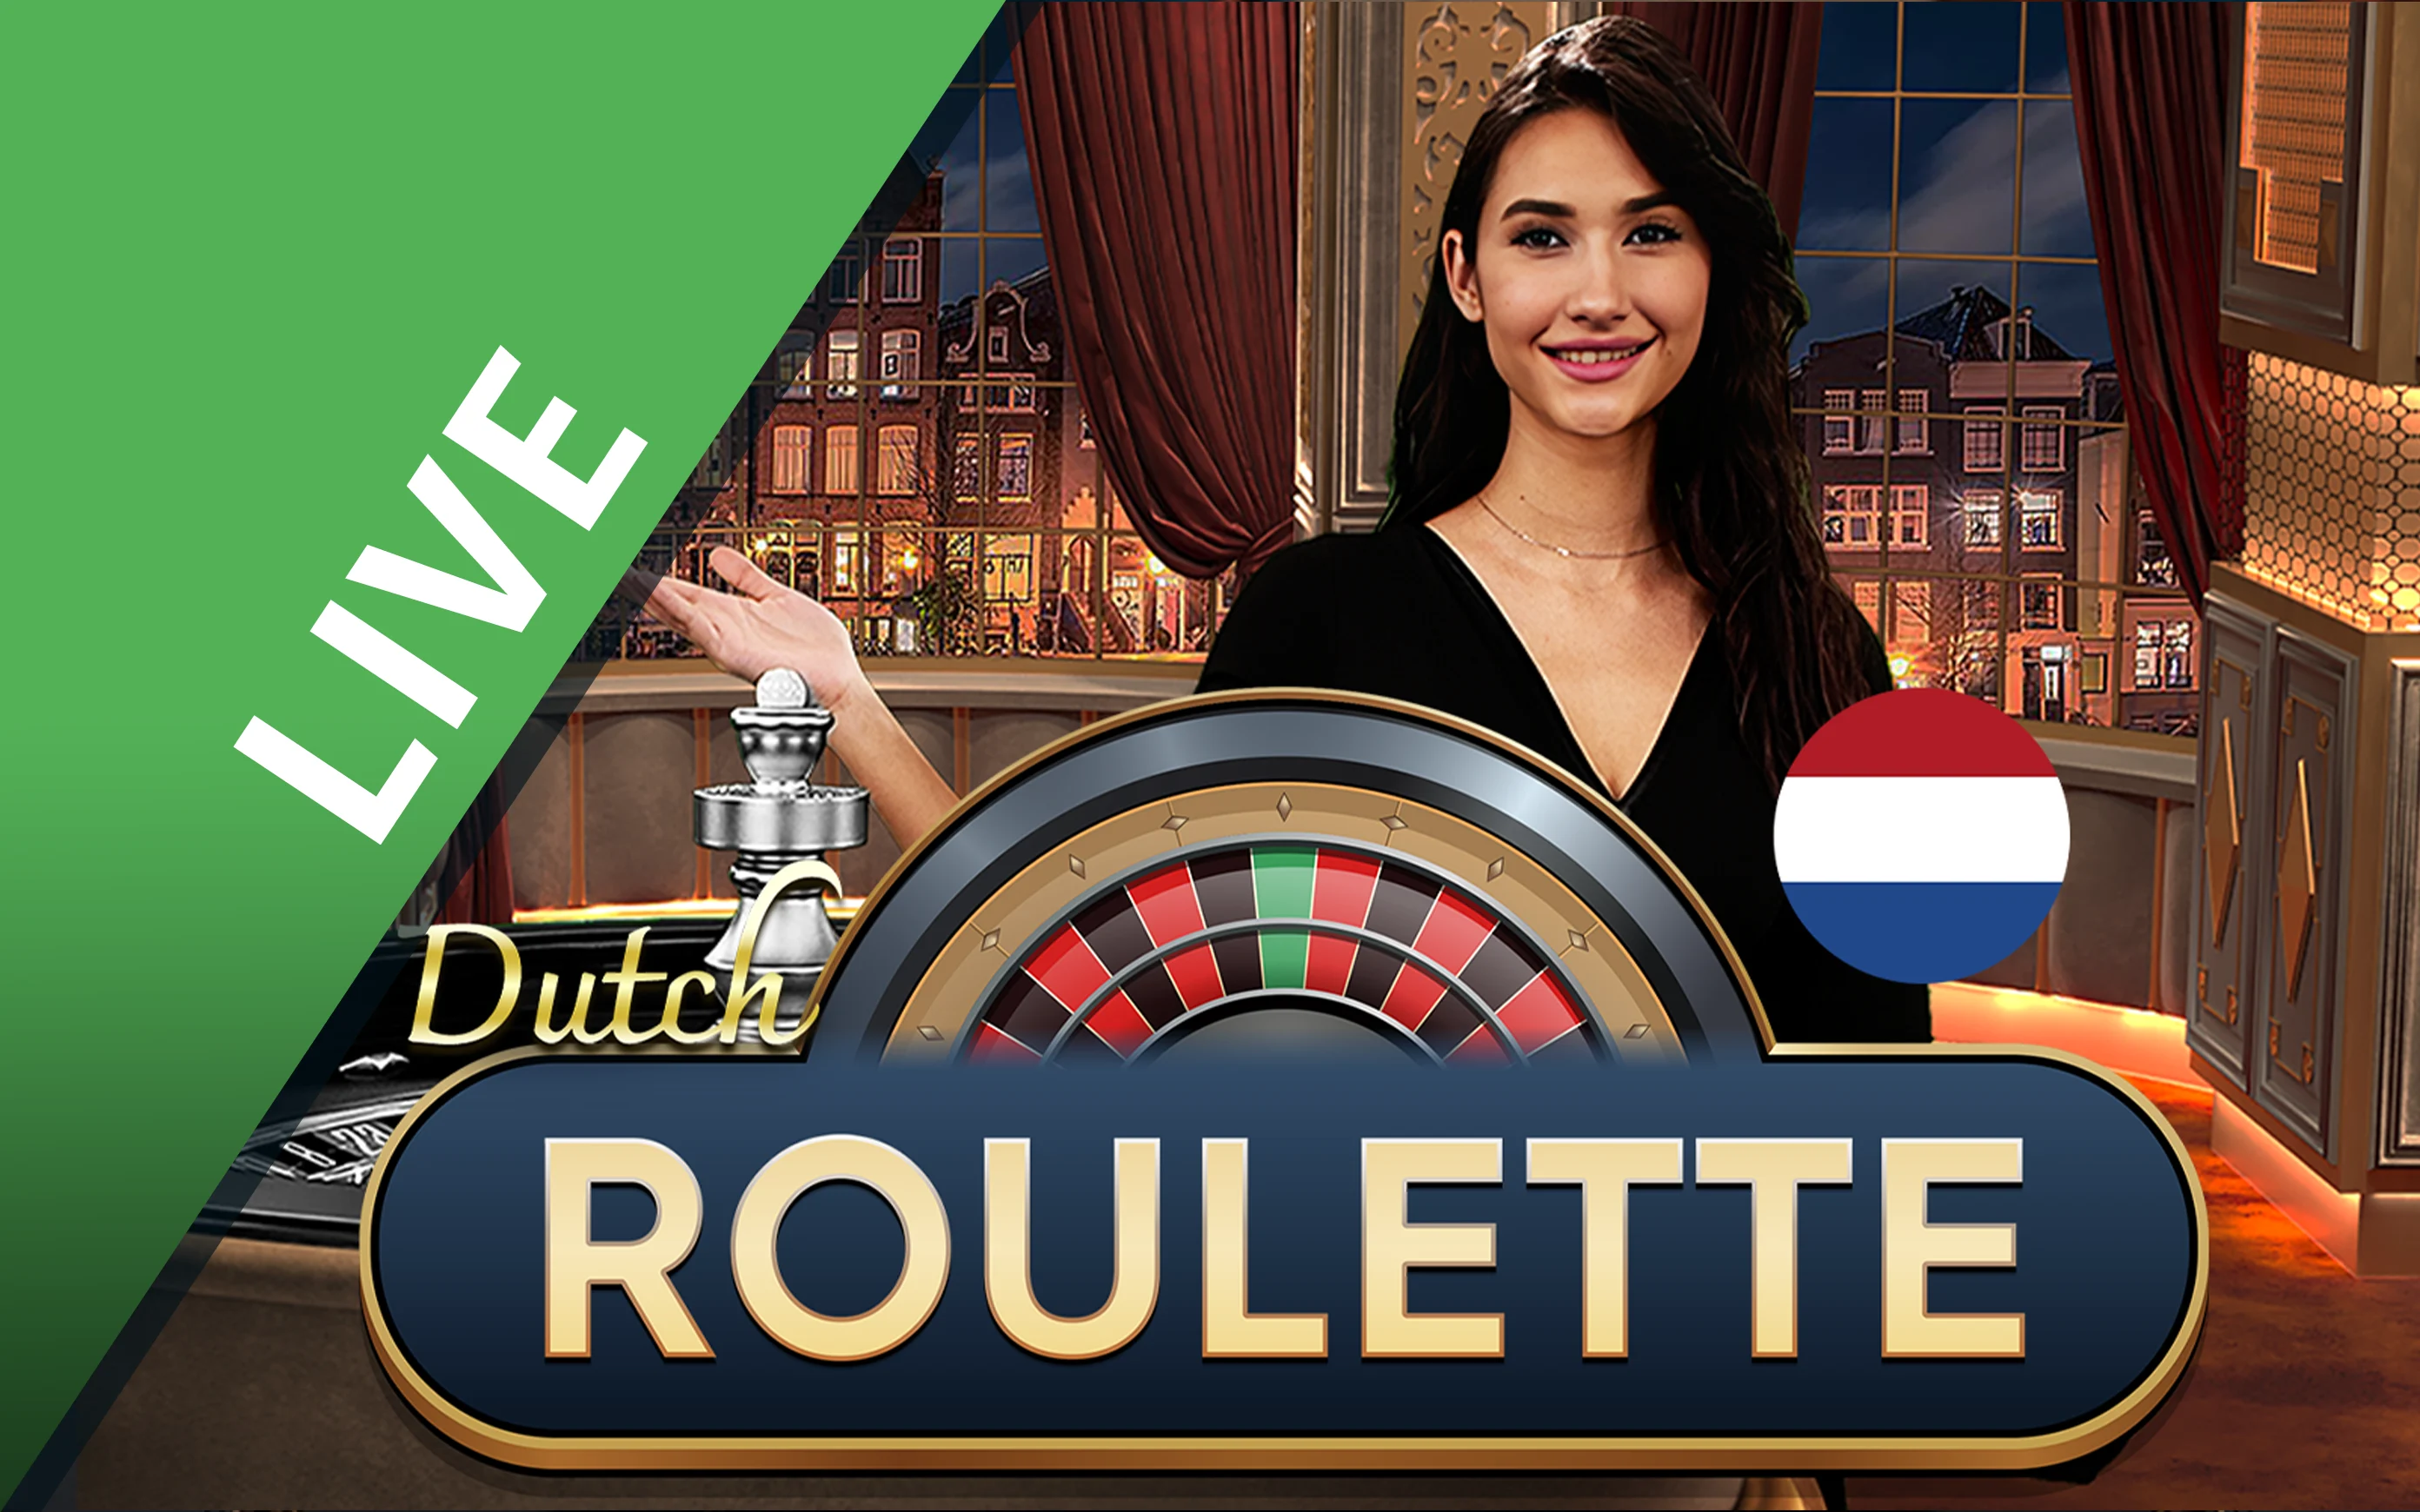 Juega a Dutch Roulette en el casino en línea de Starcasino.be